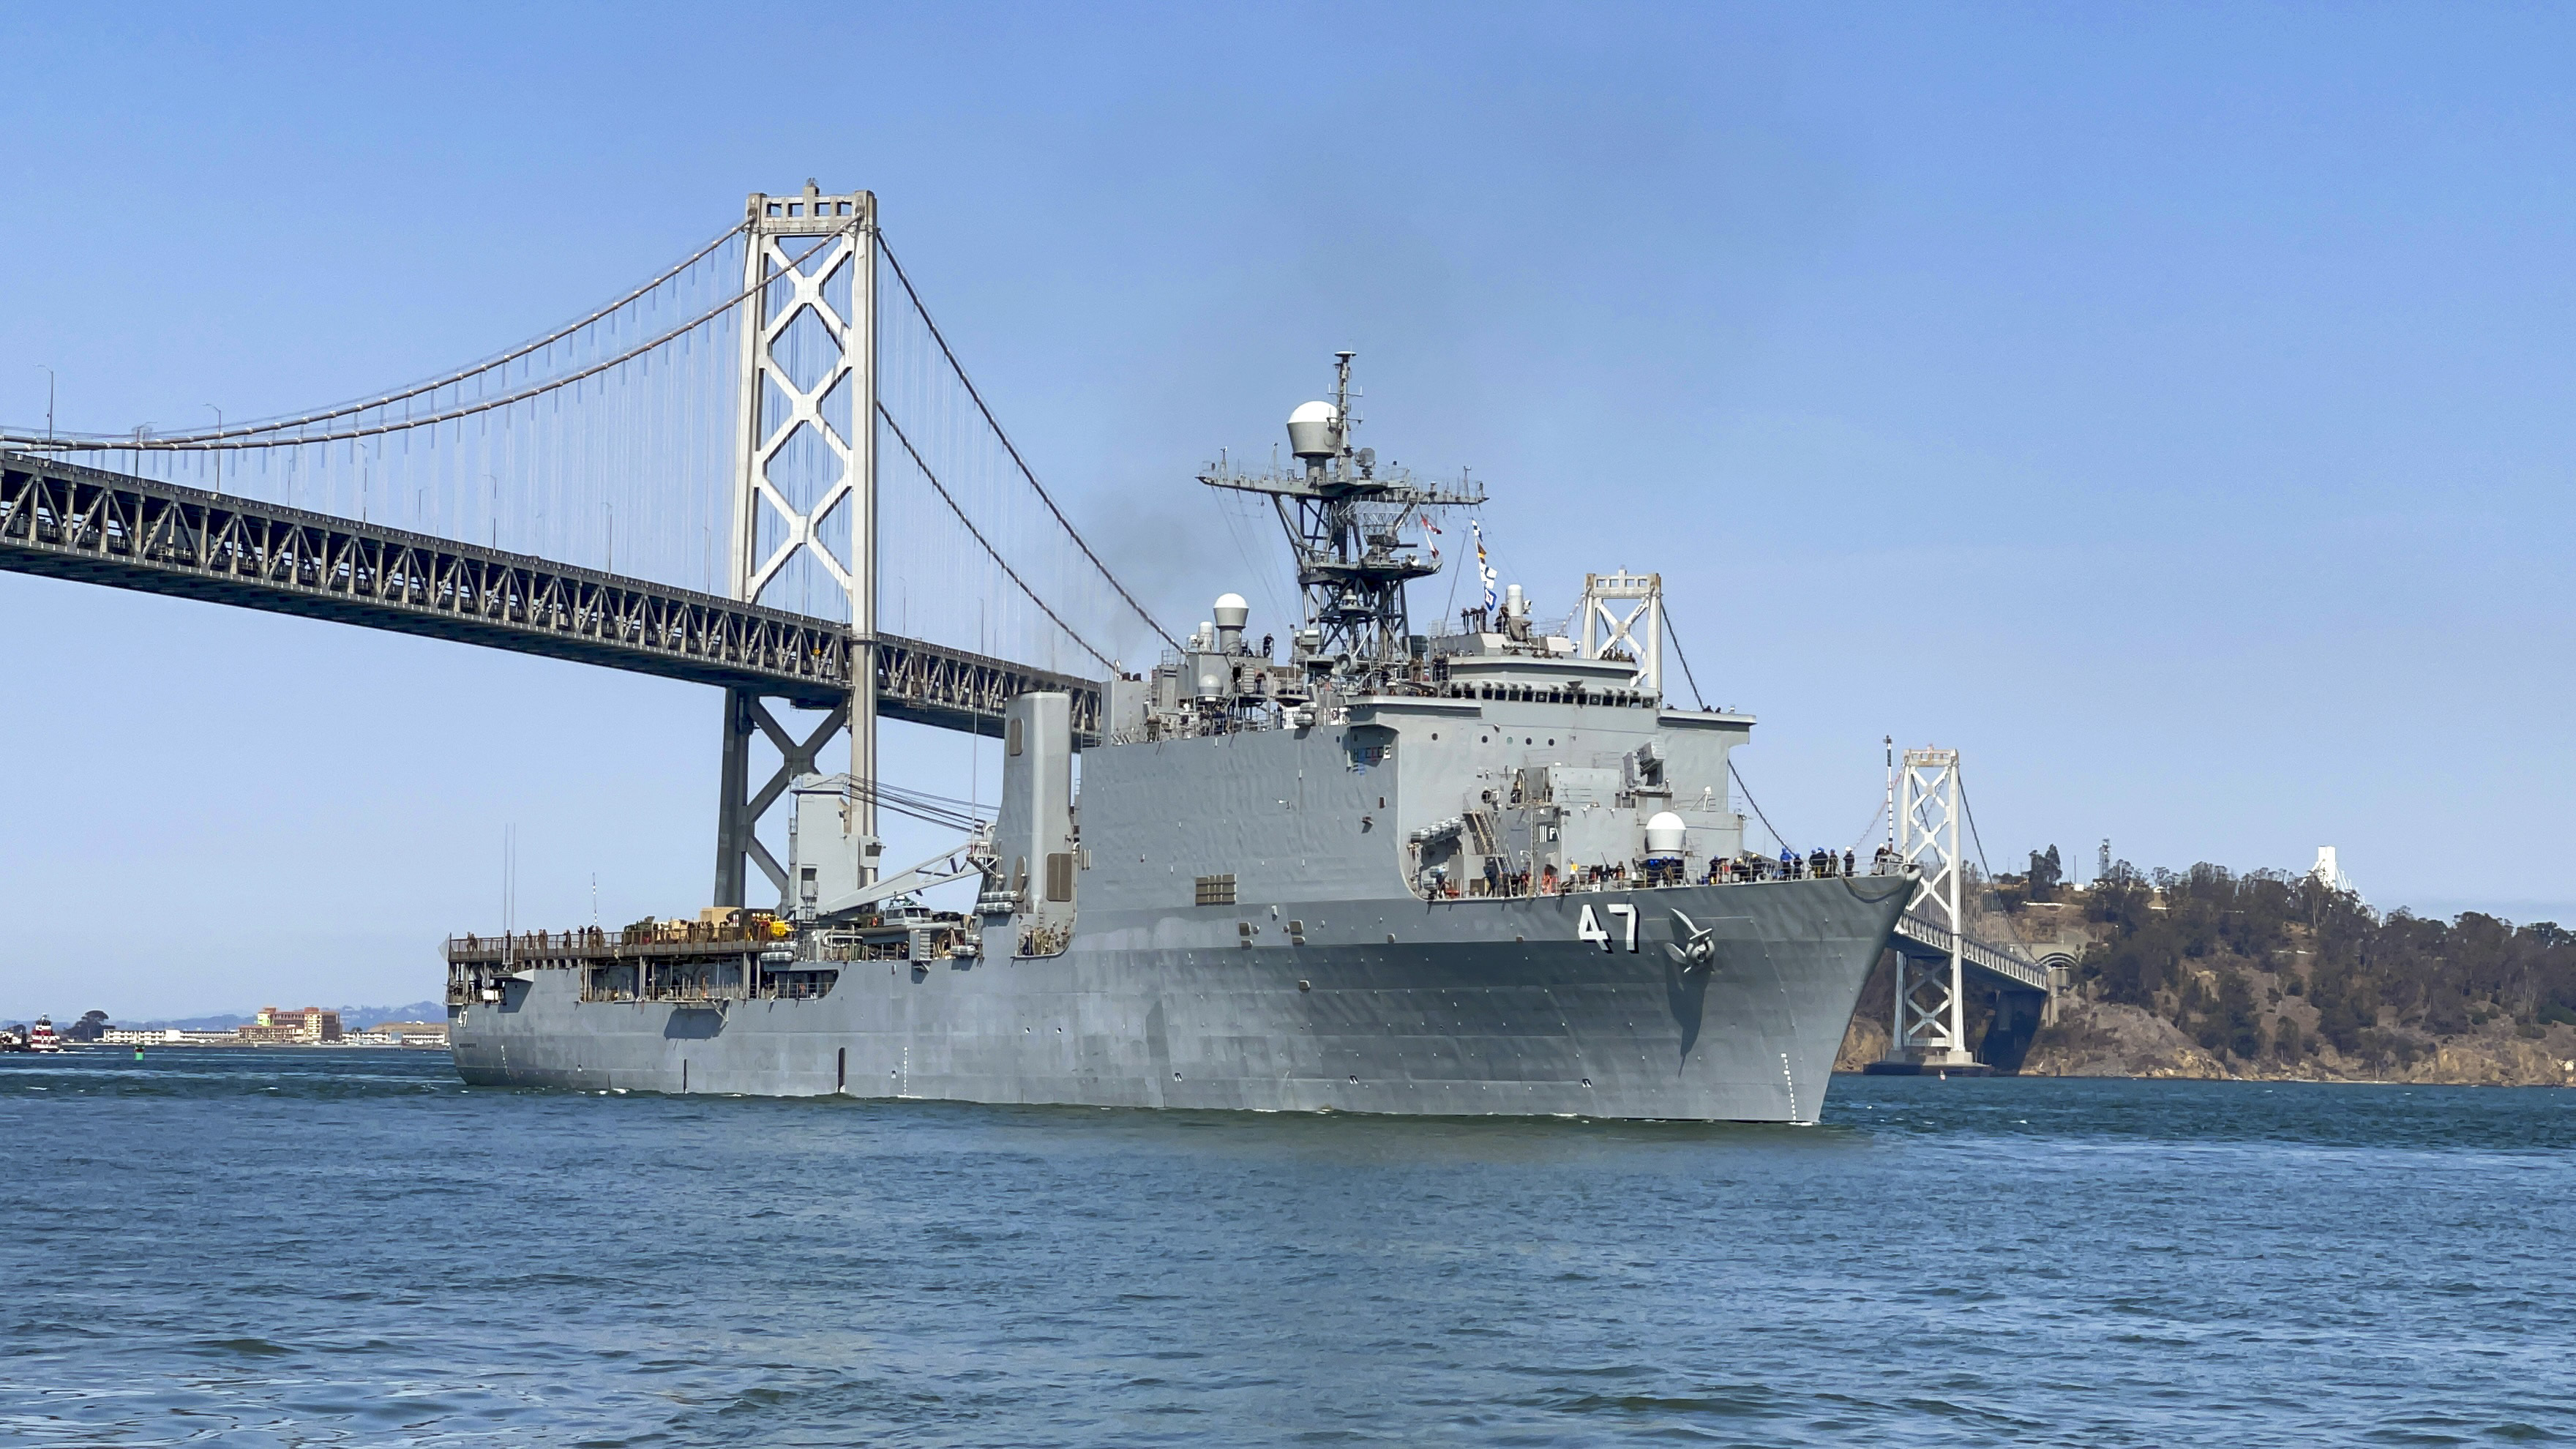 40th Annual San Francisco Fleet Week Begins > United States Navy > News